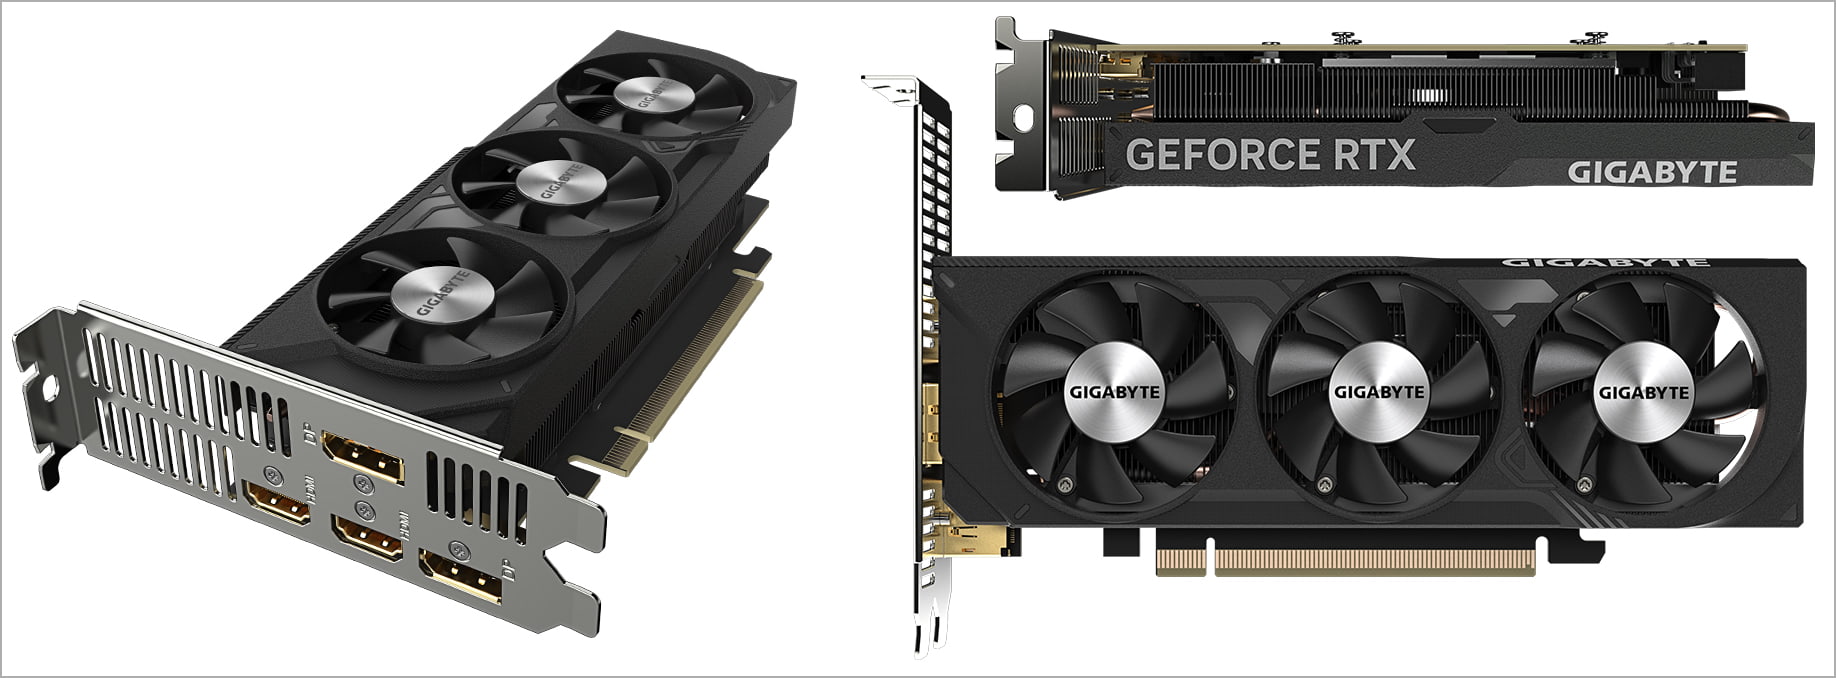 Gigabyte GeForce RTX 4060 OC Low Profile 8G